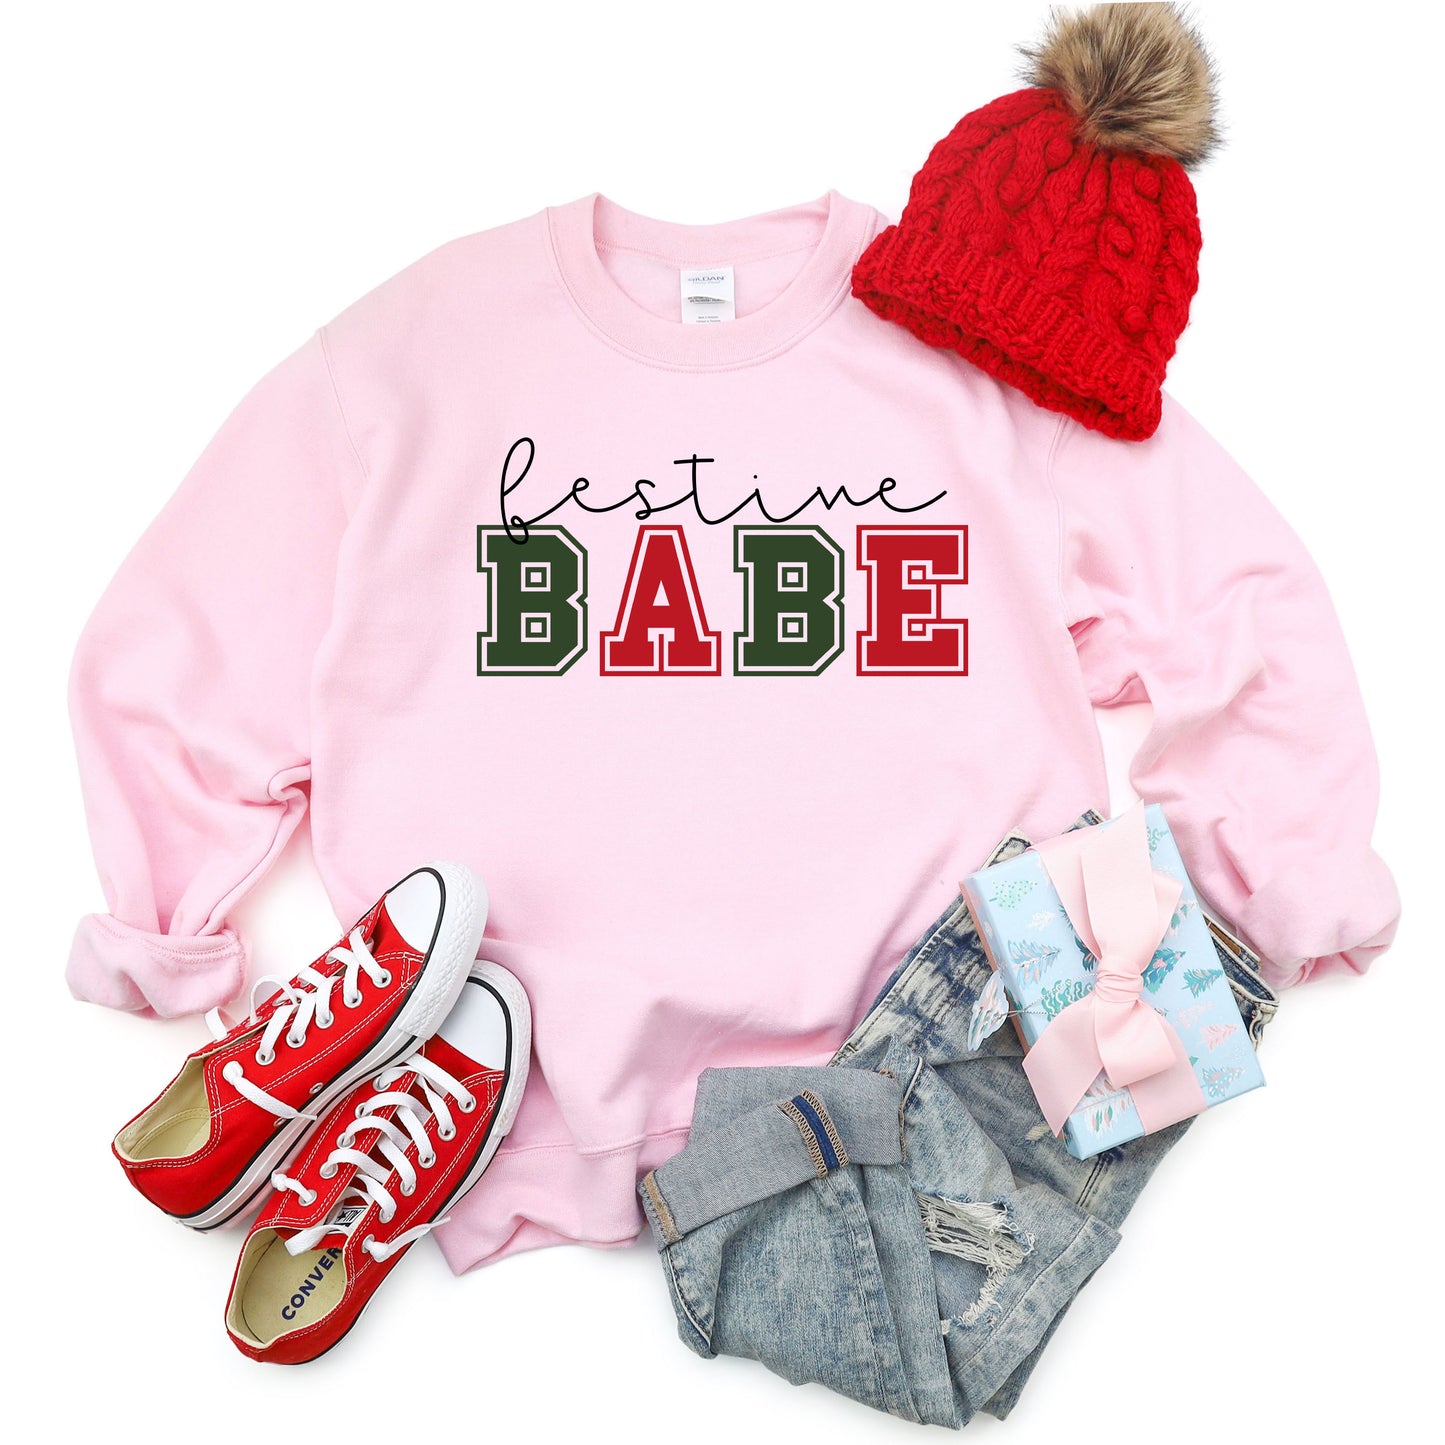 Festive Babe | Sweatshirt